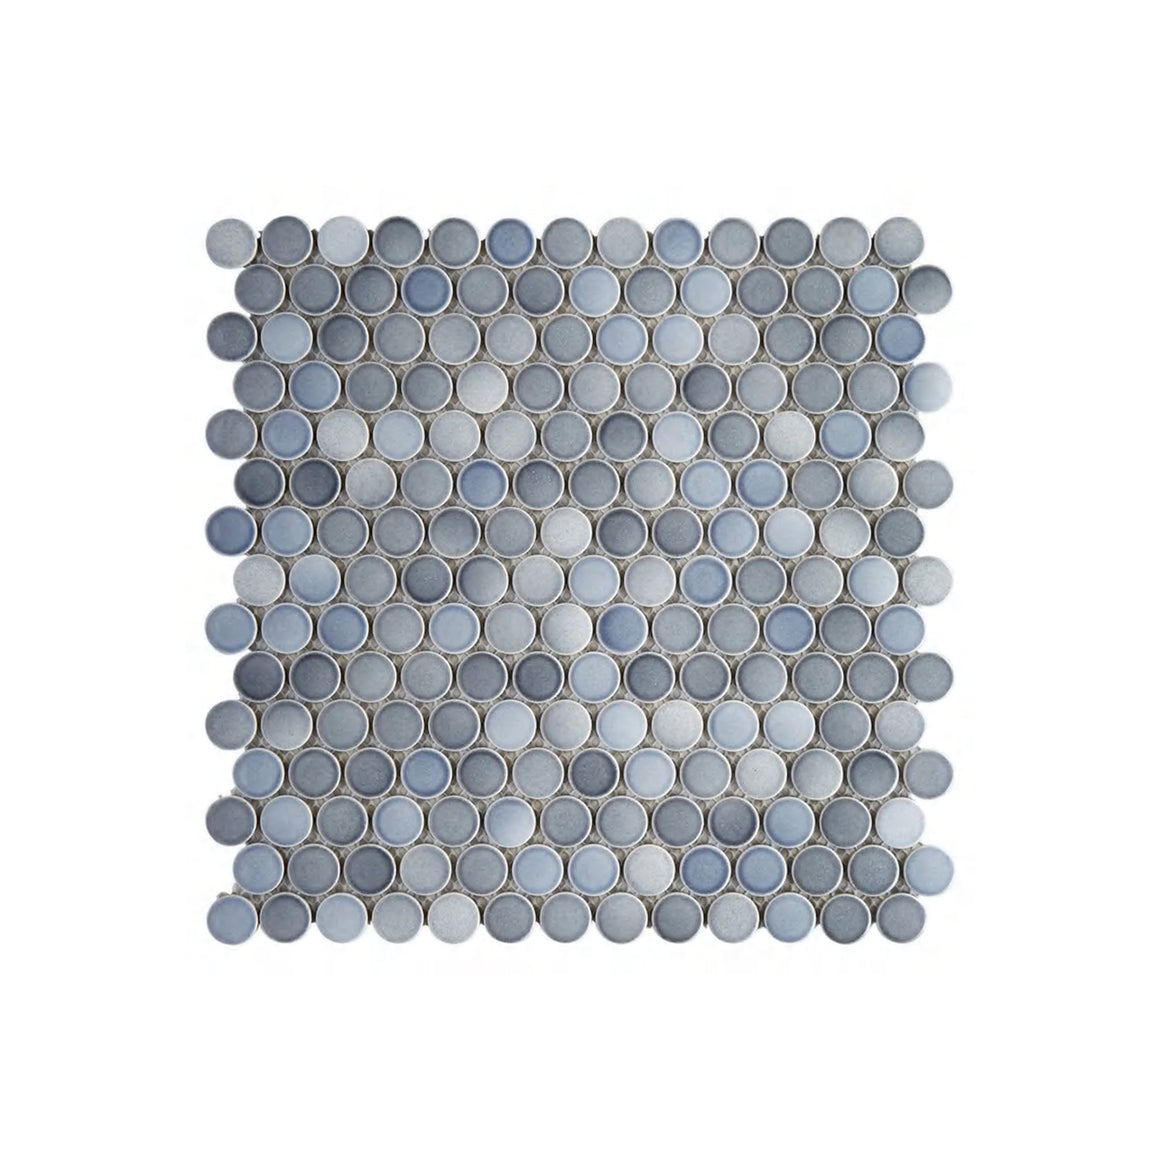 Penny Round Polished Shades of Gray Porcelain Mosaic